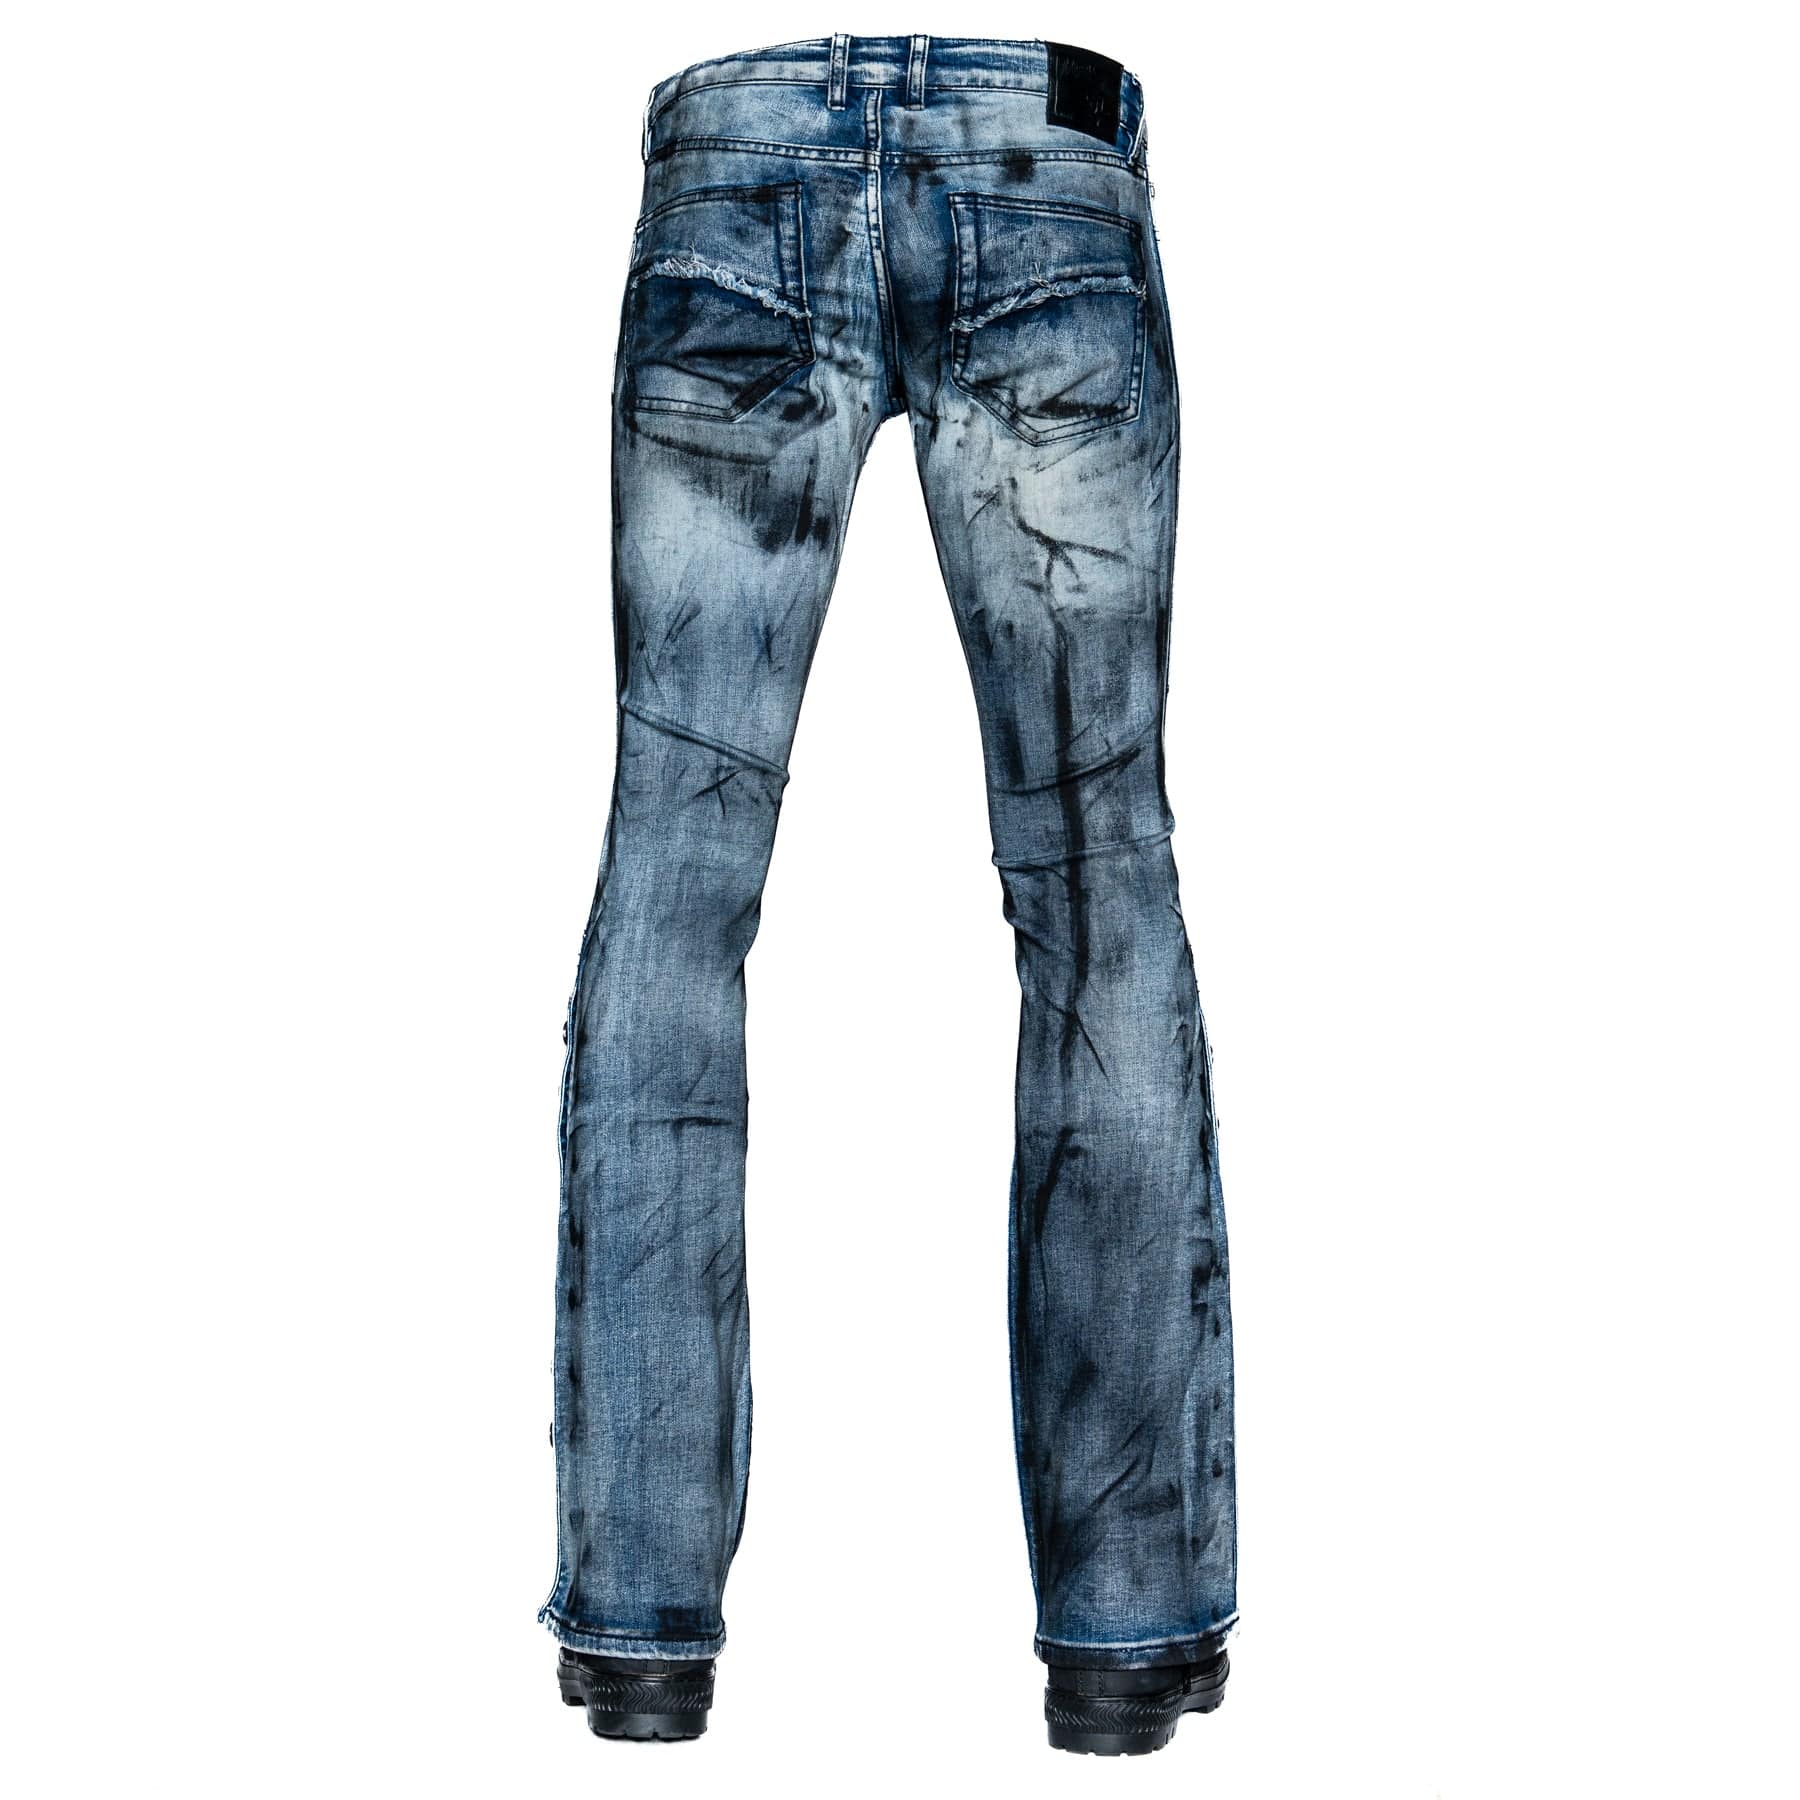 Custom Chop Shop Pants Wornstar Custom Jeans - Black Onyx Alloy Wash - Side Button